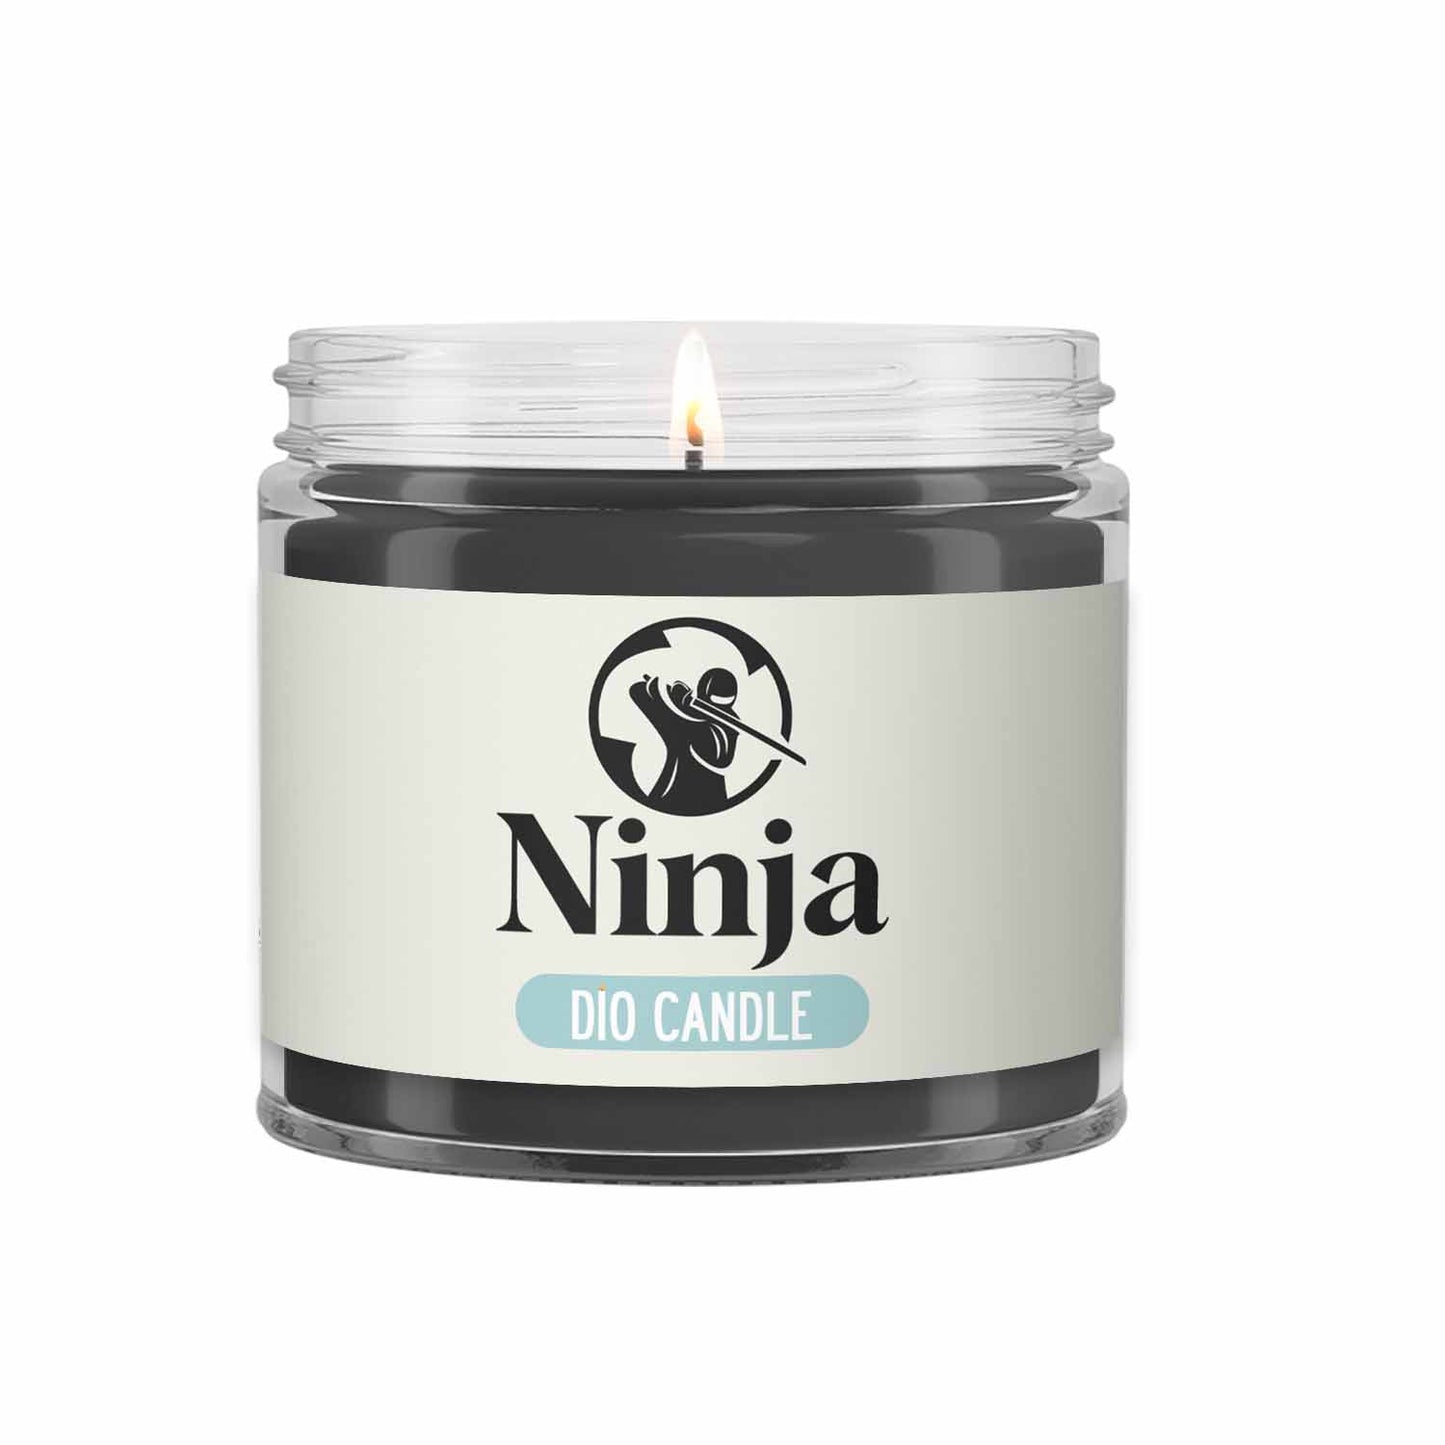 Ninja Candle